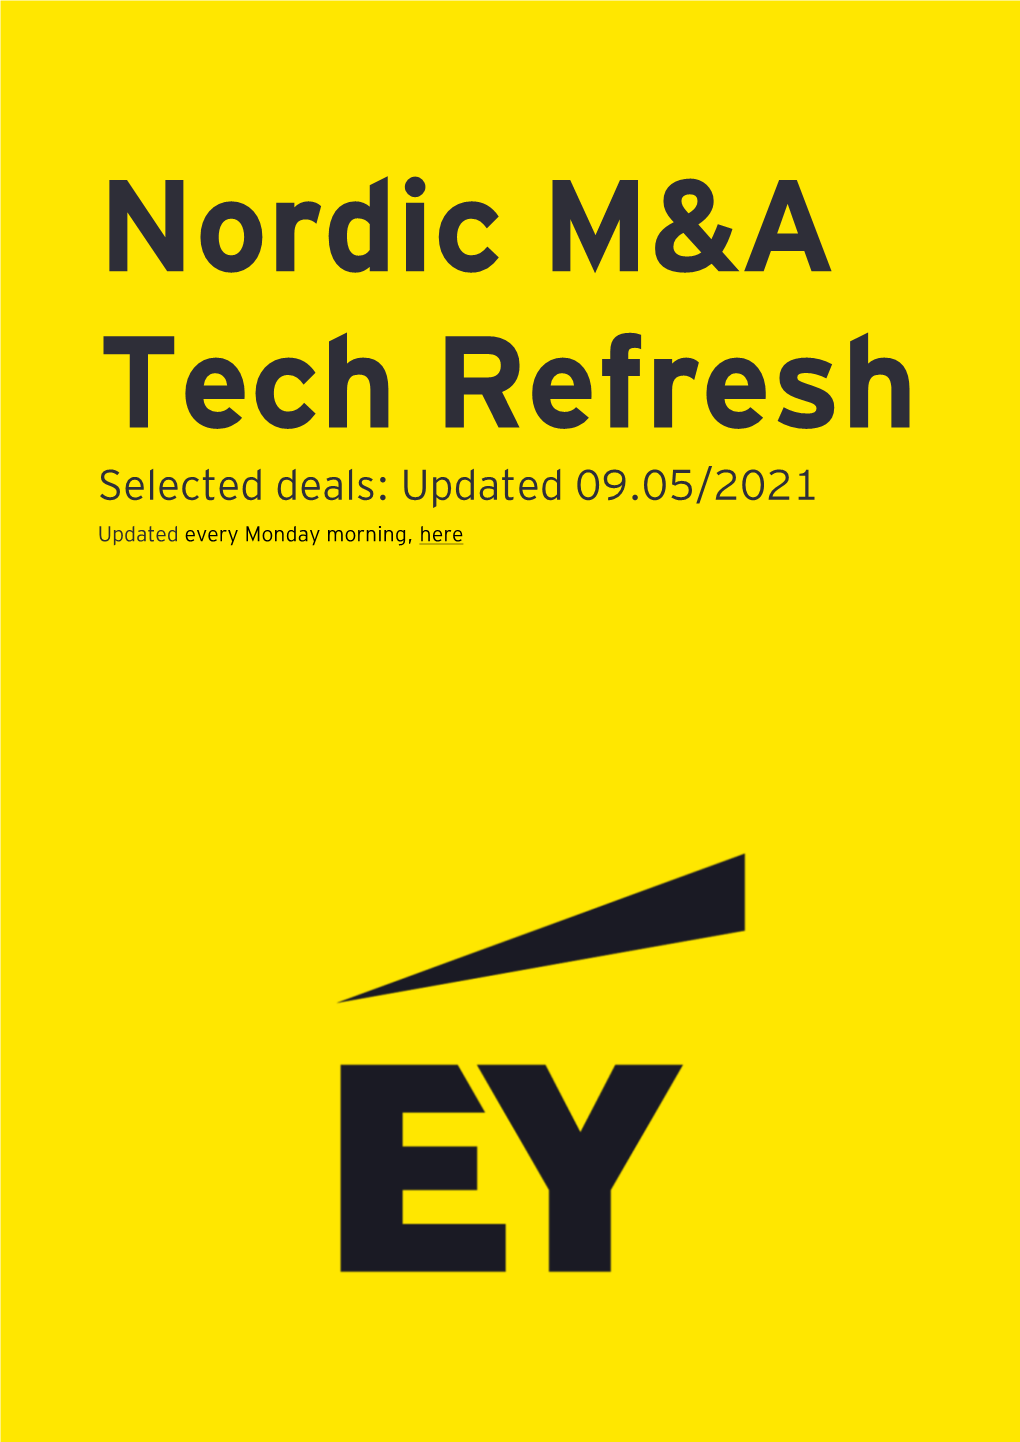 Nordic M&A Tech Refresh